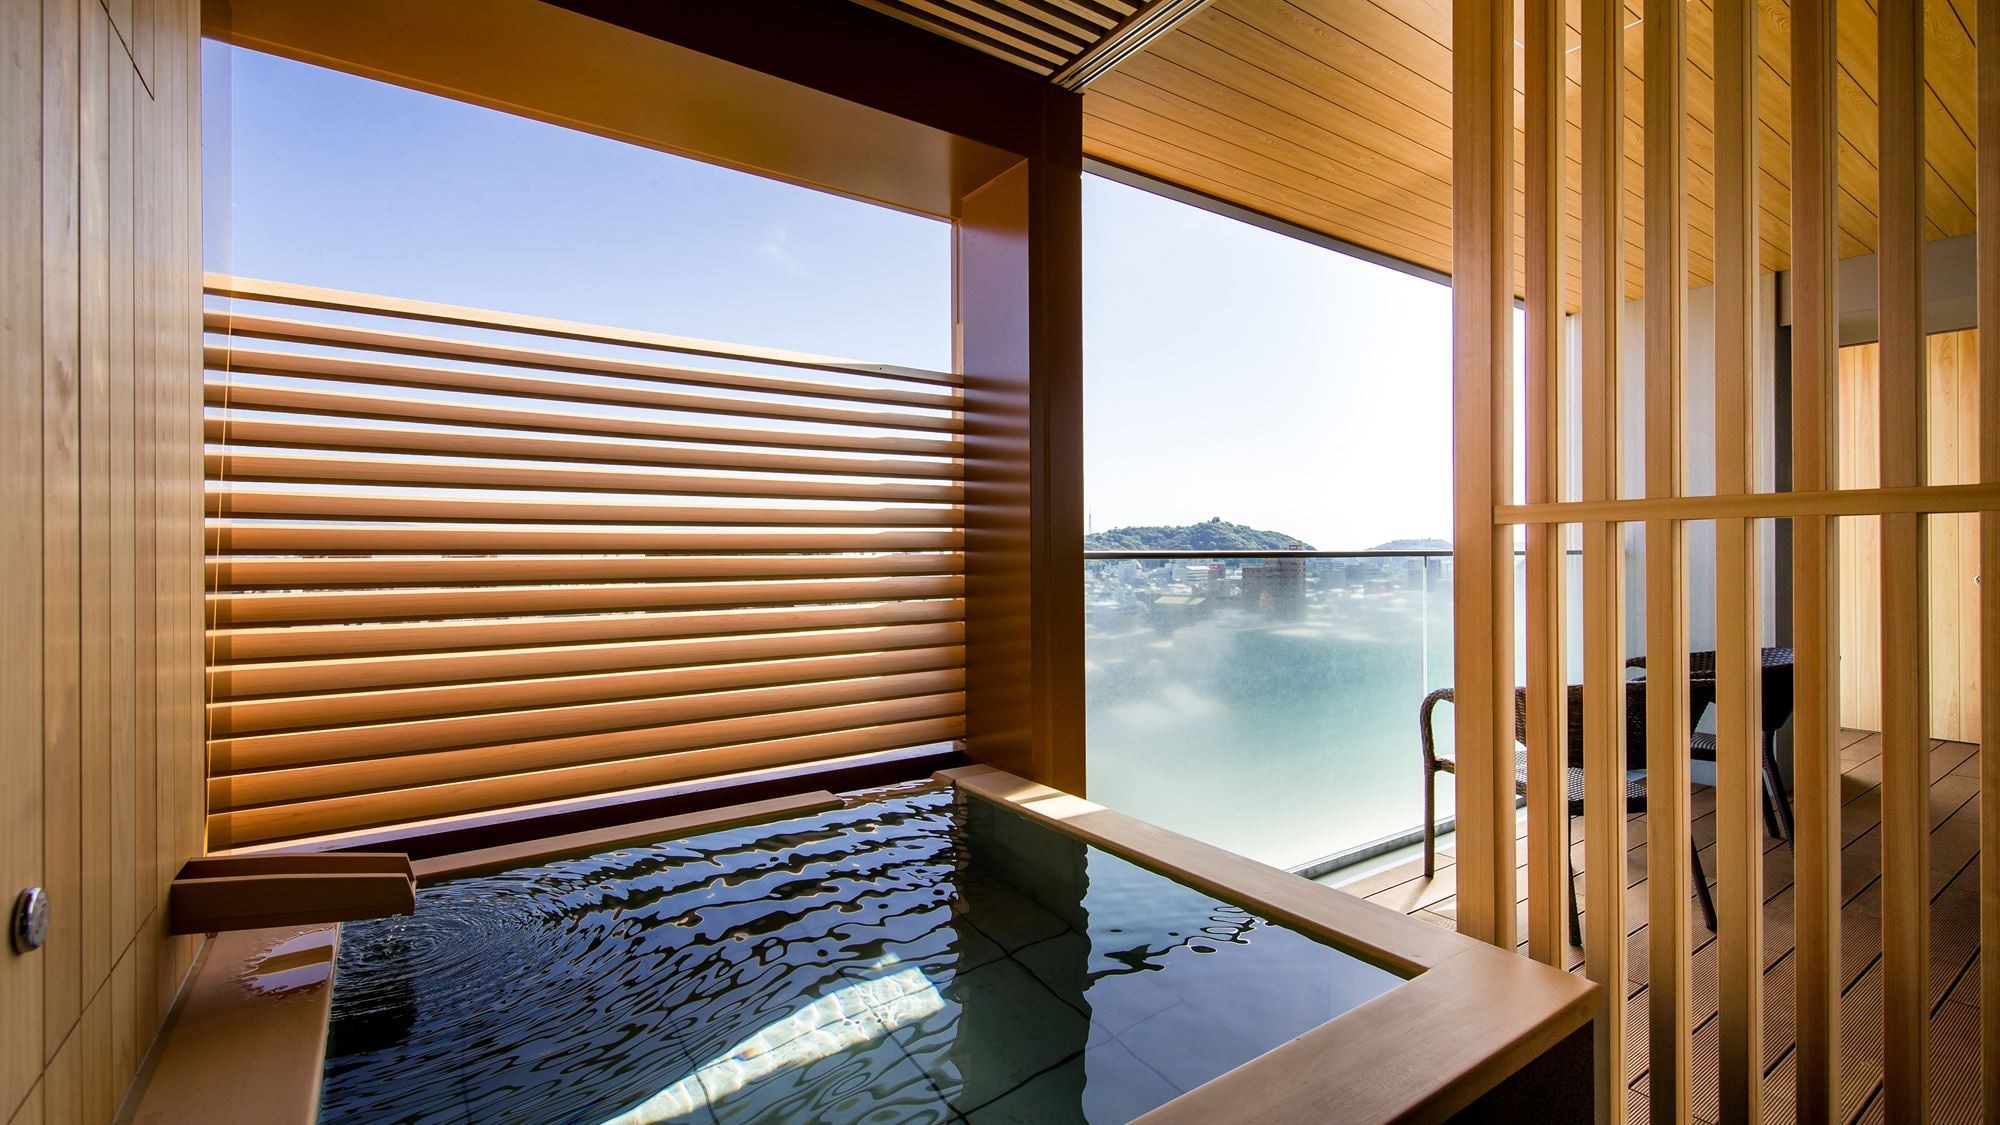 ◆ Guest room open-air bath ◆